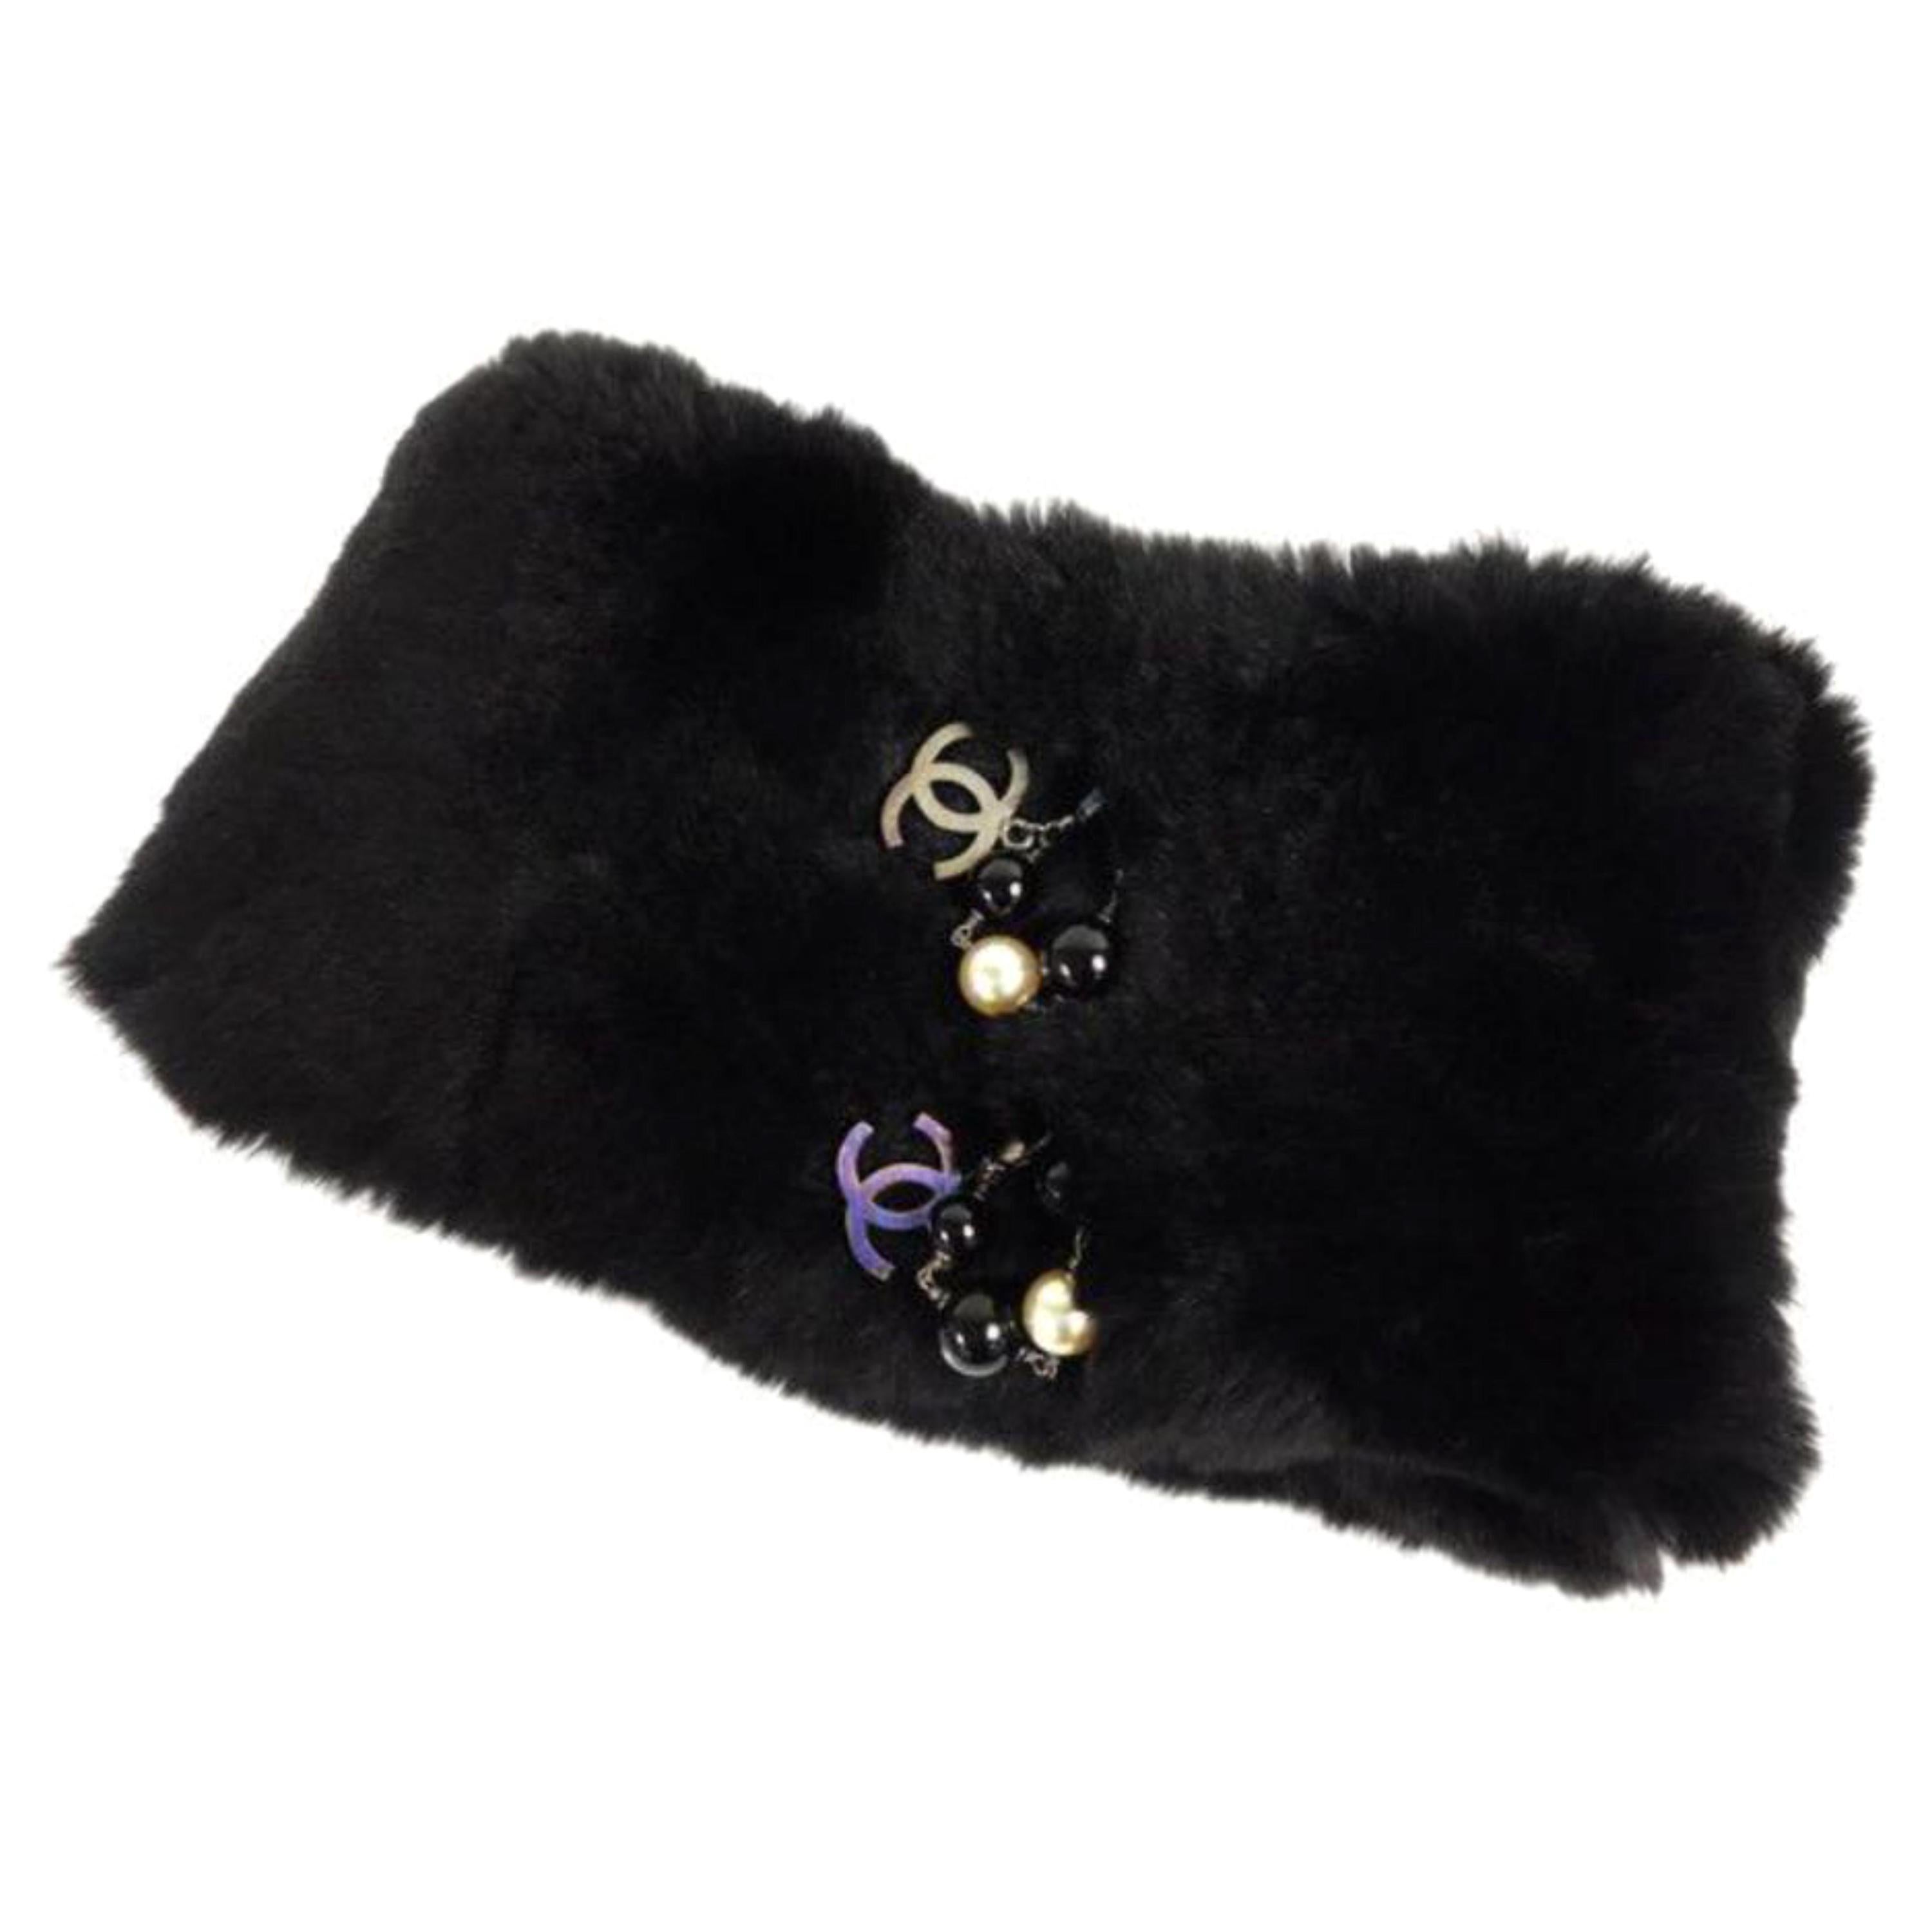 Chanel Black Double Cc Charm Pearl Rabbit Fur Scarf 231526 For Sale